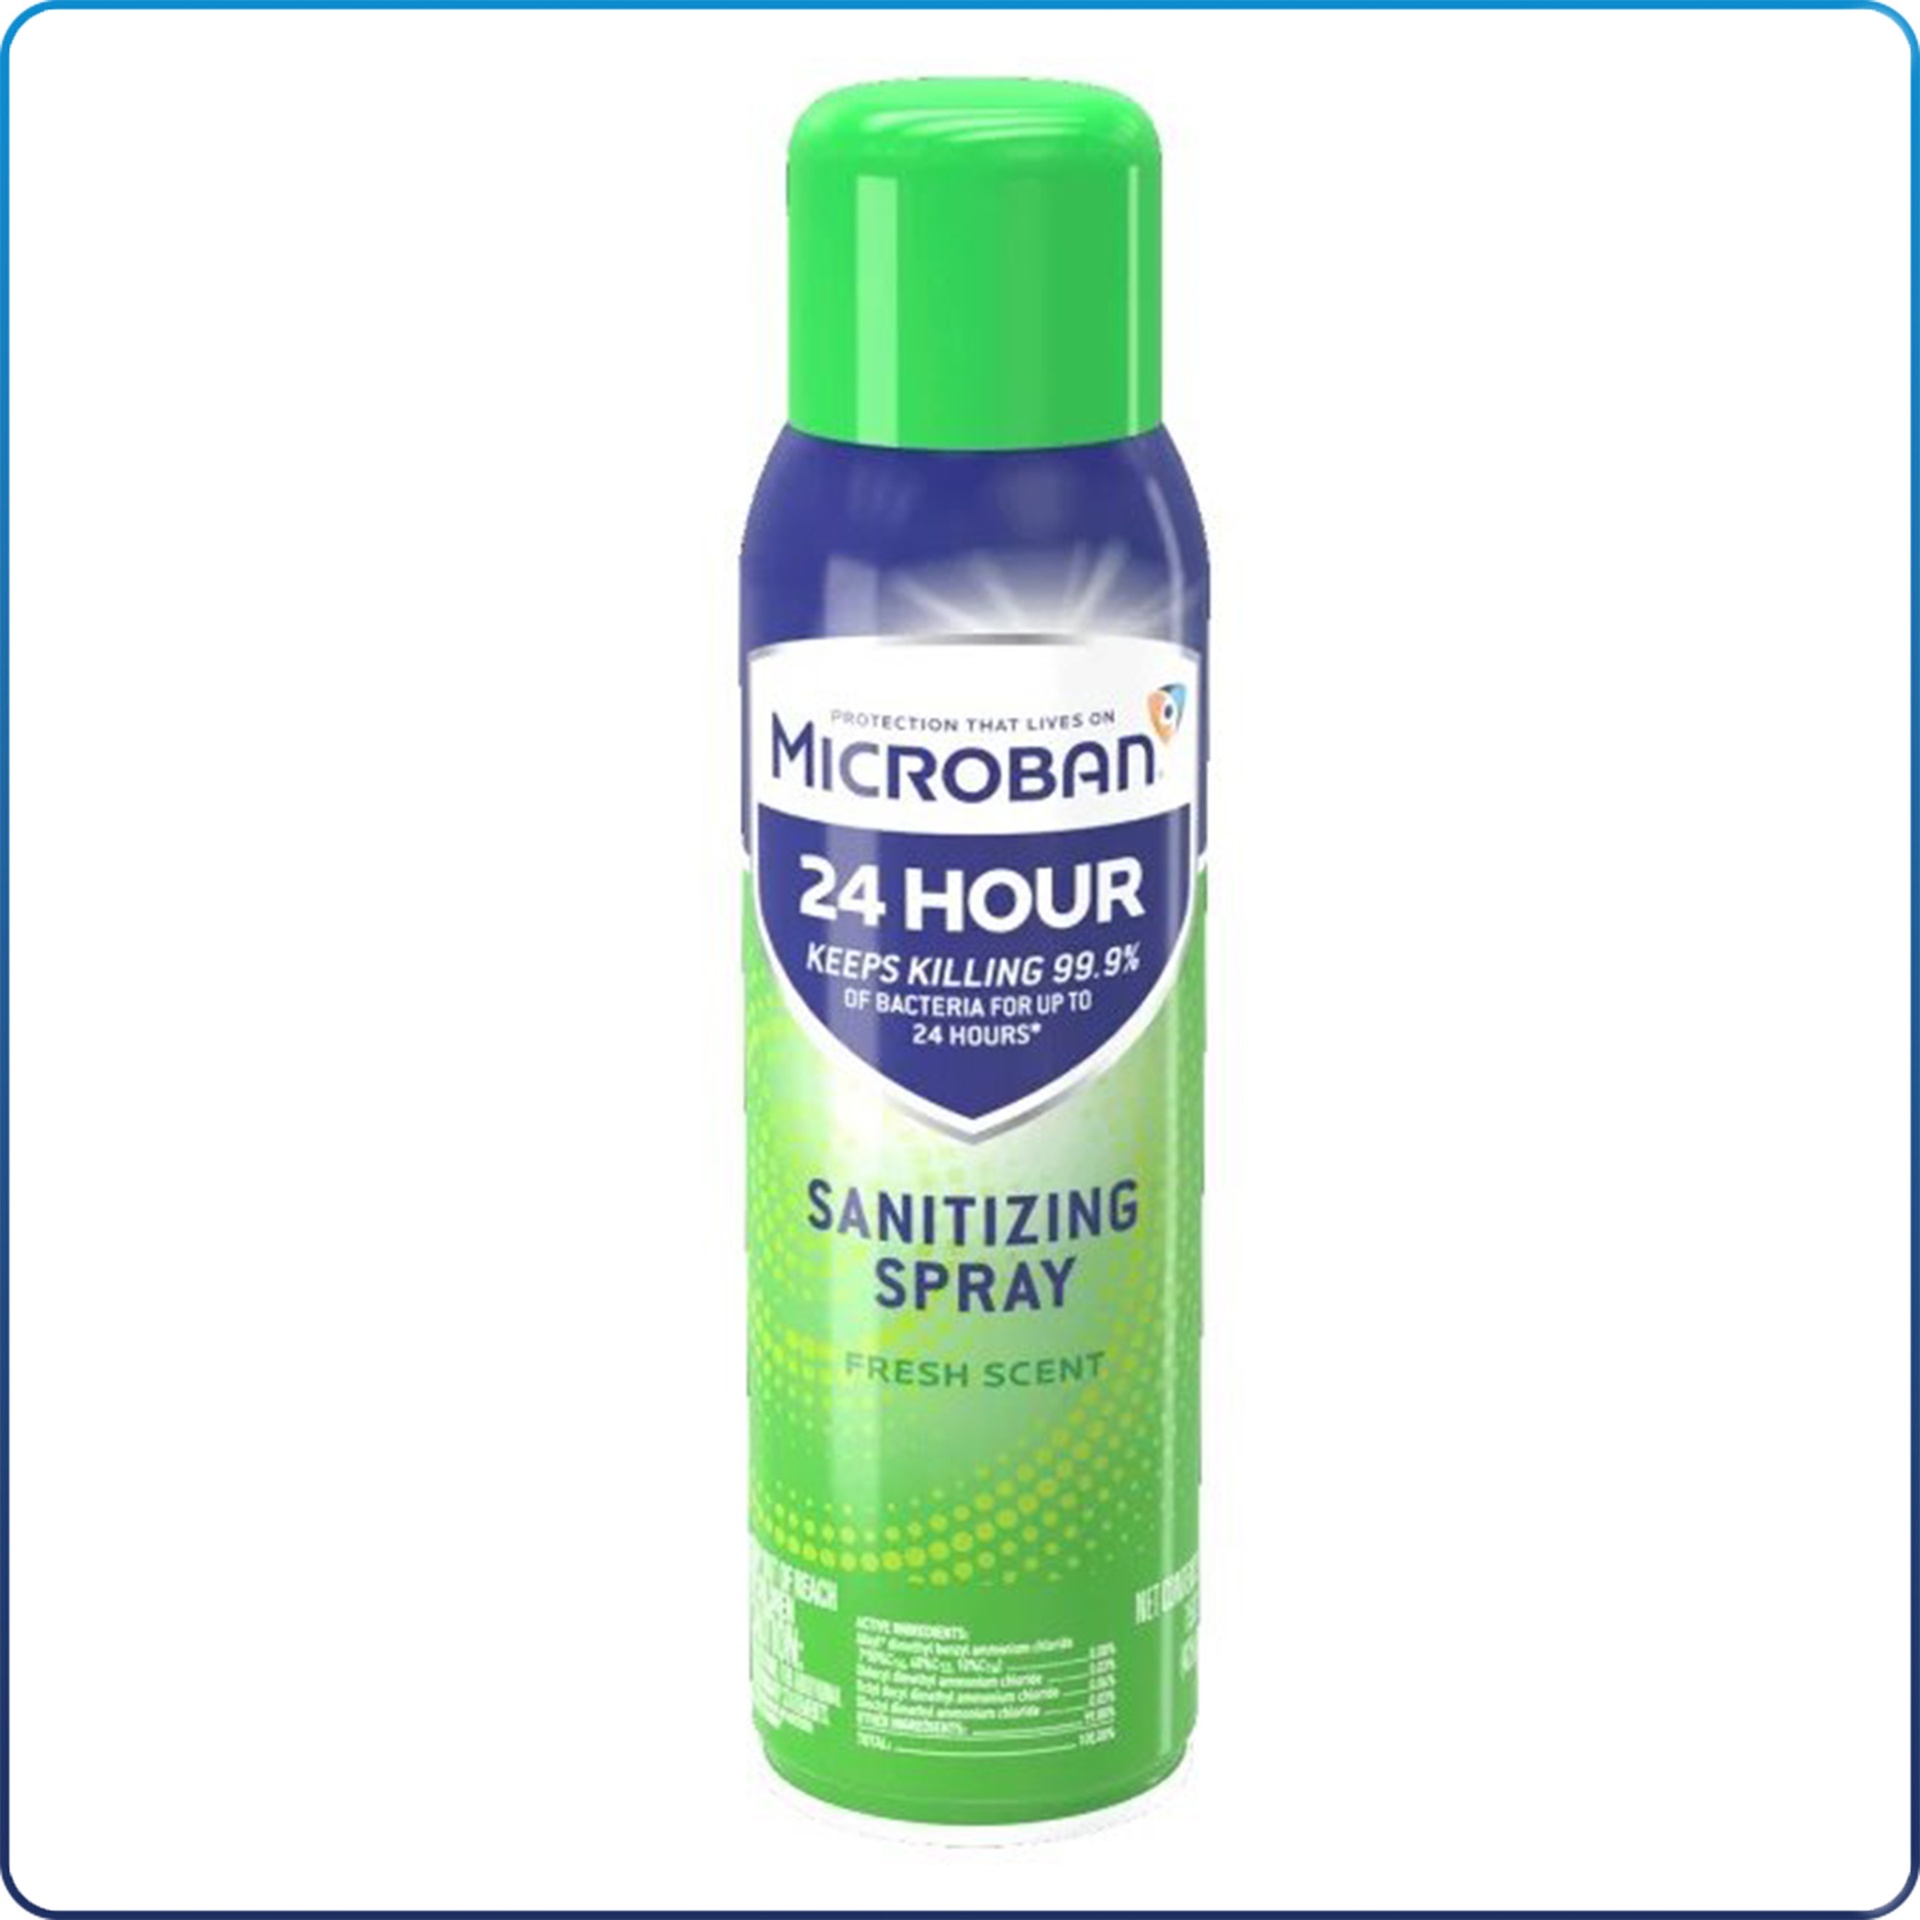 [8218230130] Microban Sanitizing Aerosol Spray 15oz.